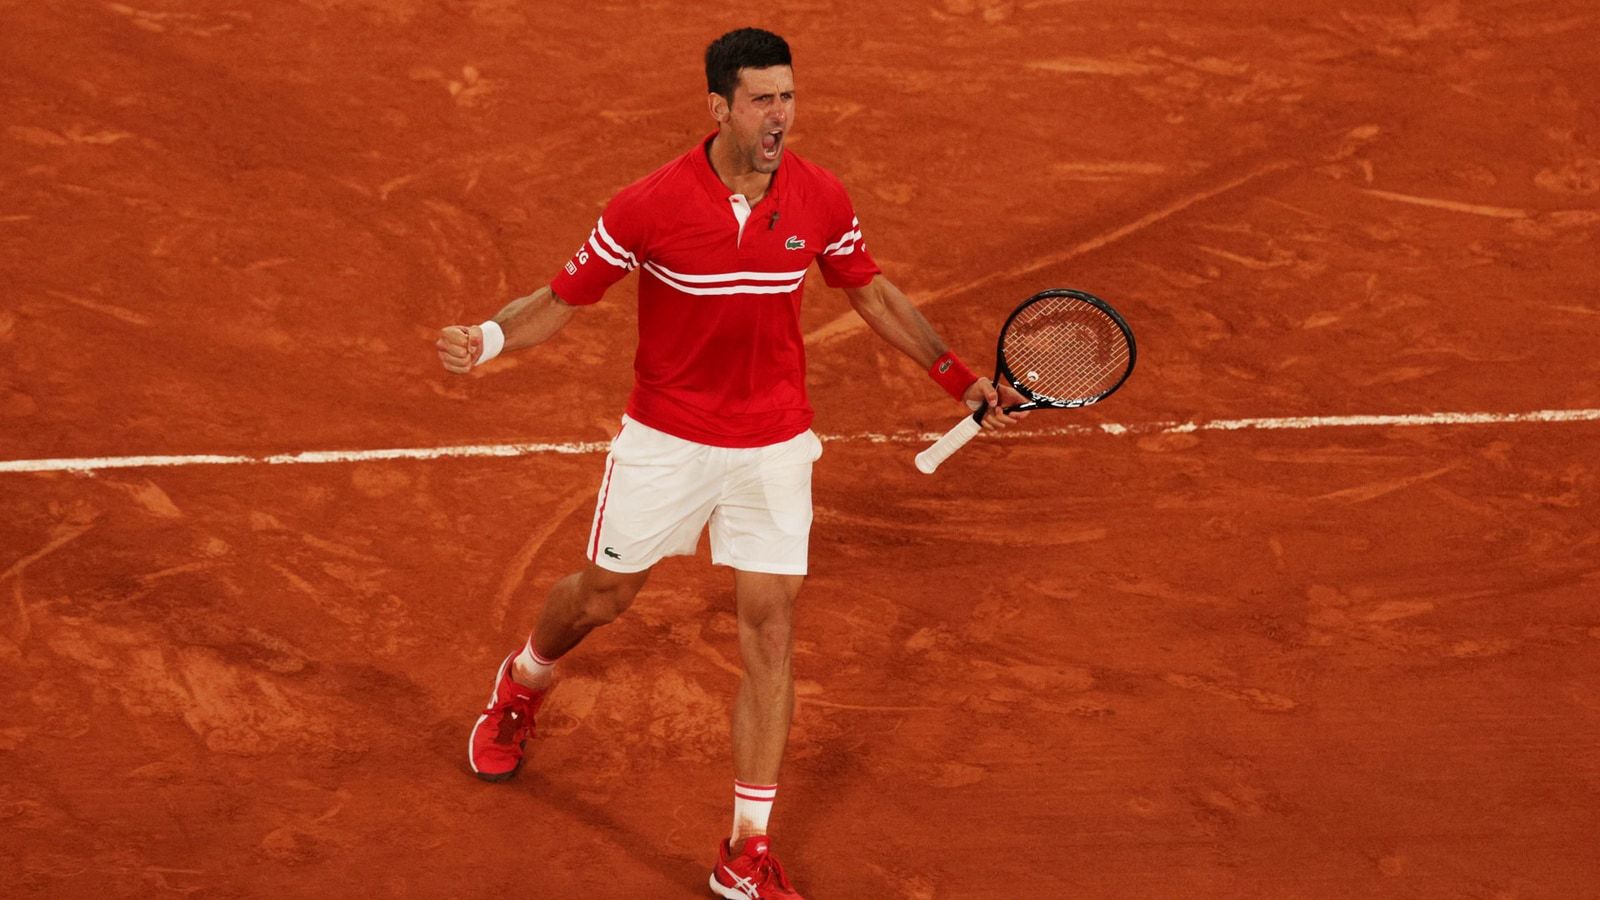 French Open 2021 Semi Finals Highlights: Novak Djokovic beats Rafael Nadal to reach Roland Garros final